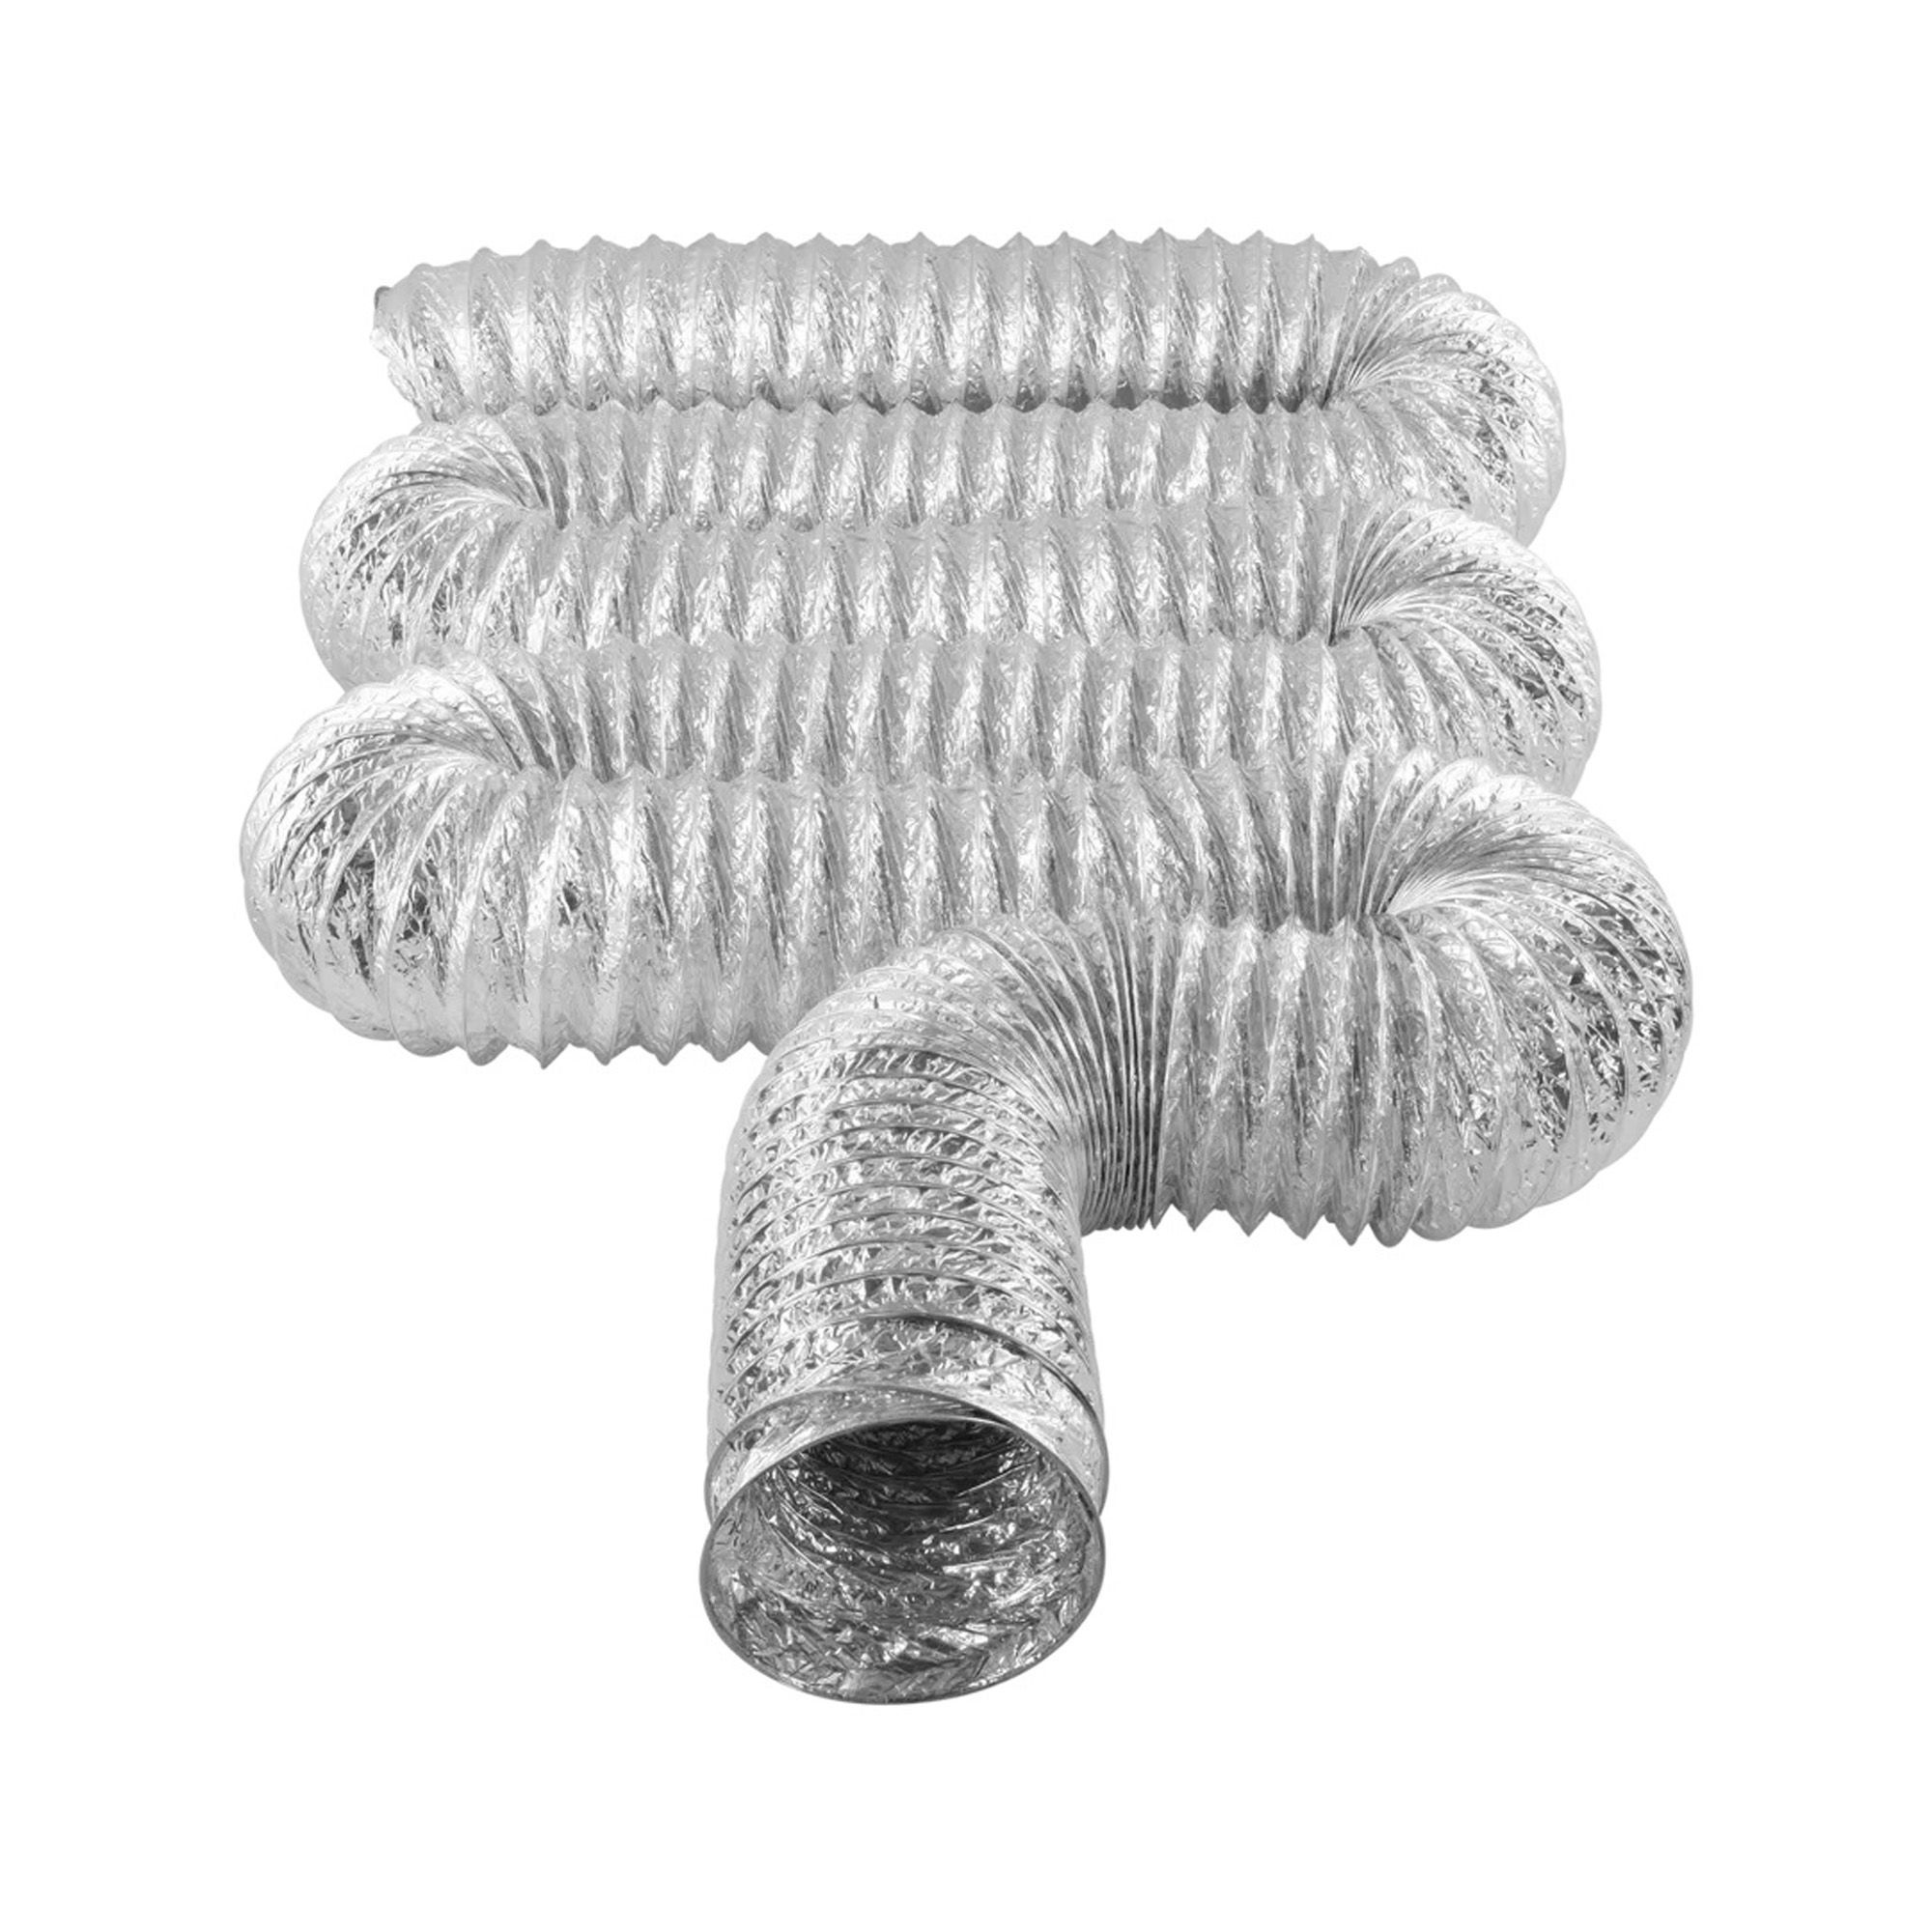 Tuyau de ventilation flexible isolé, 4 po x 25 pi